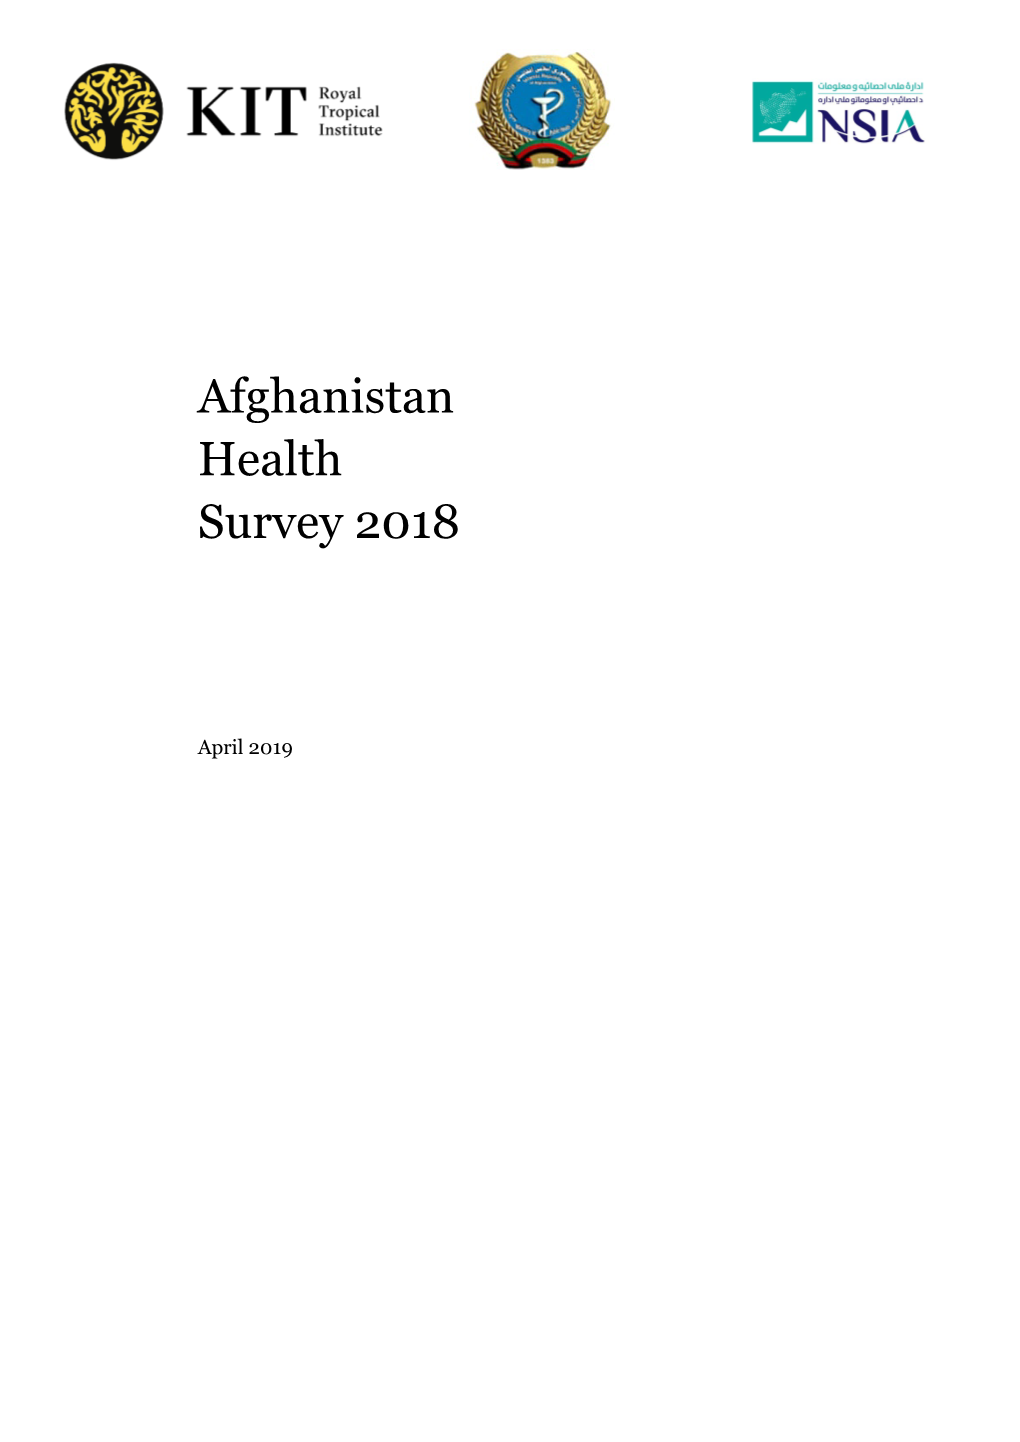 Afghanistan Health Survey 2018 Final Report